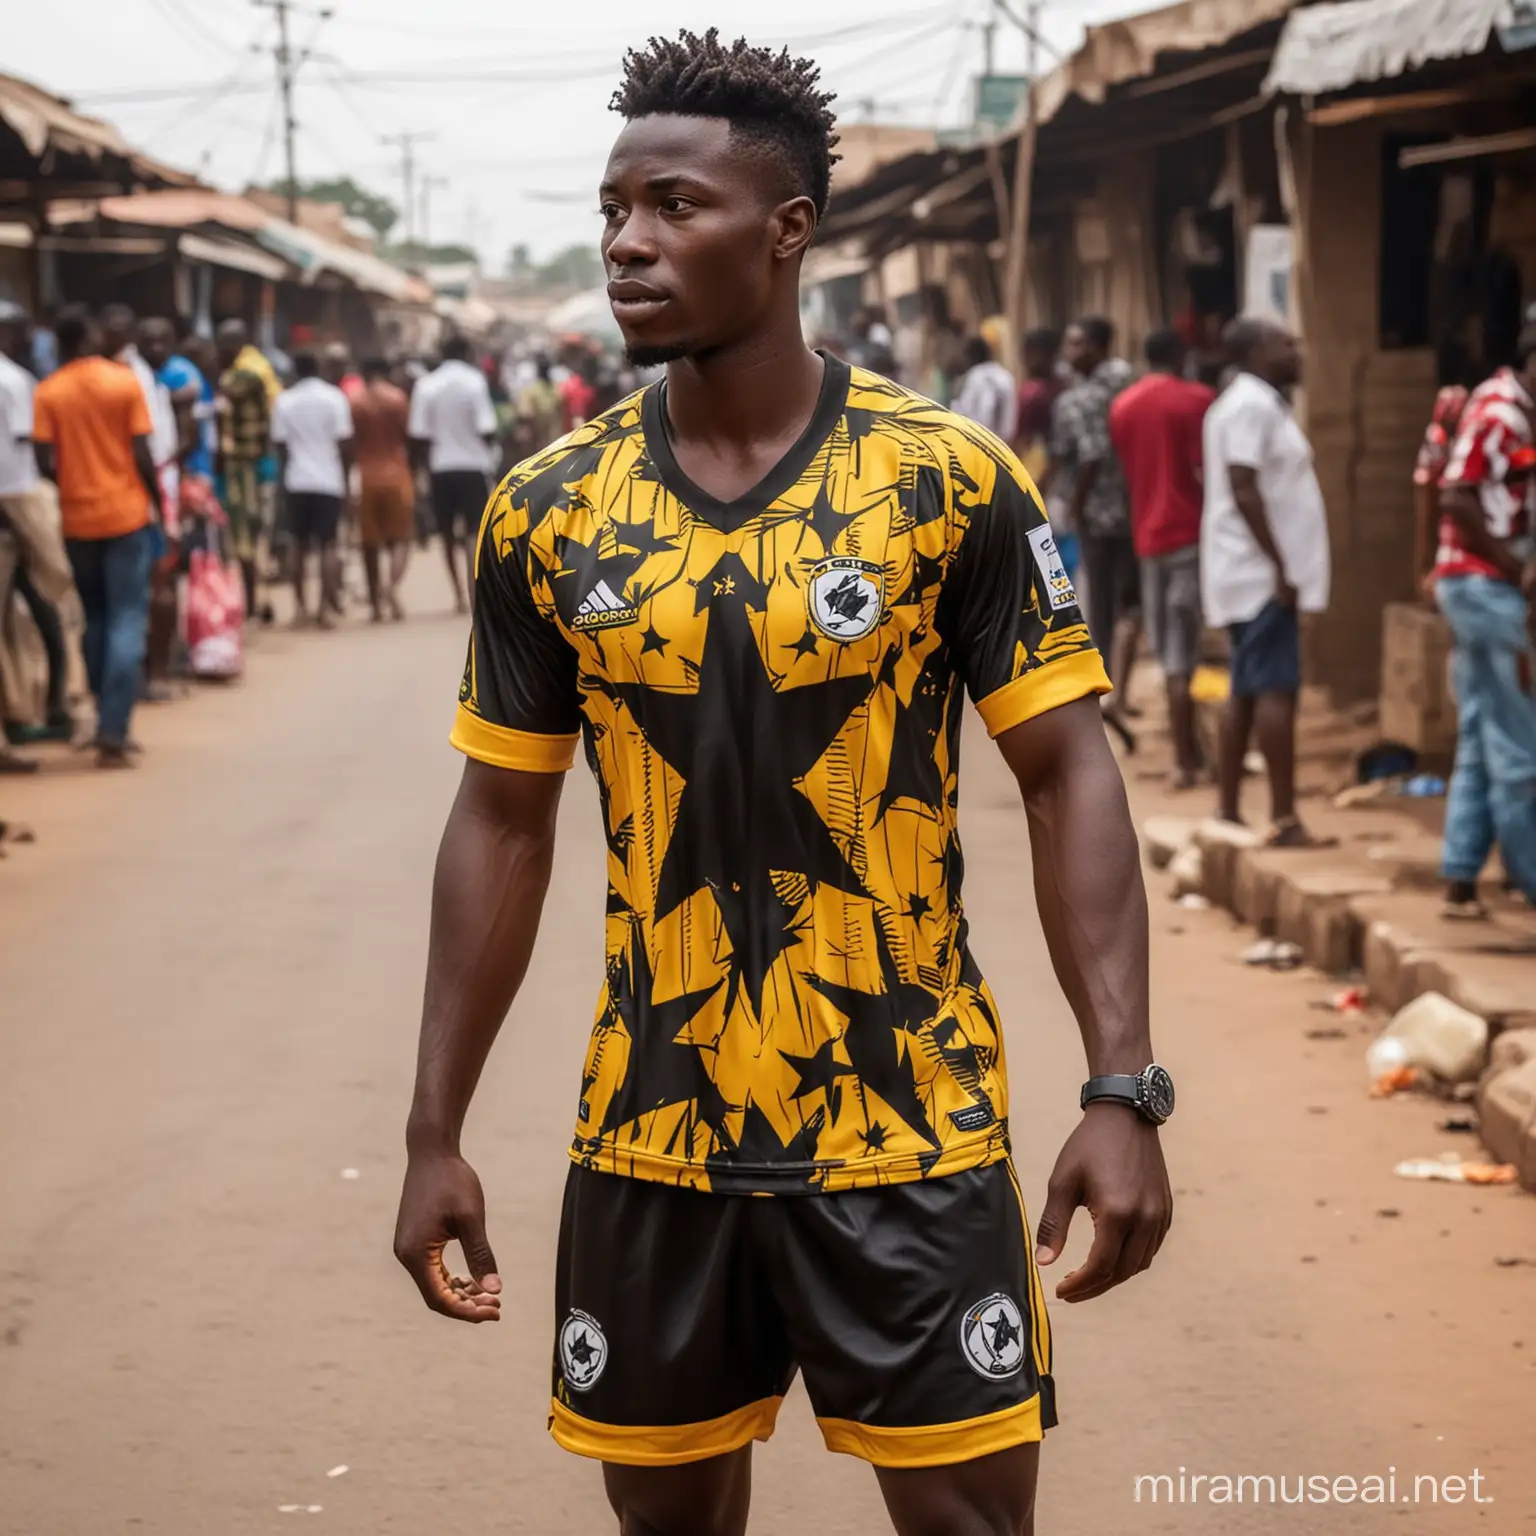 Generate a hyperrealistic Man in a GHANA black stars football jerseys on the streets of Makola market. I don't want it like a cartoon. It should look very real